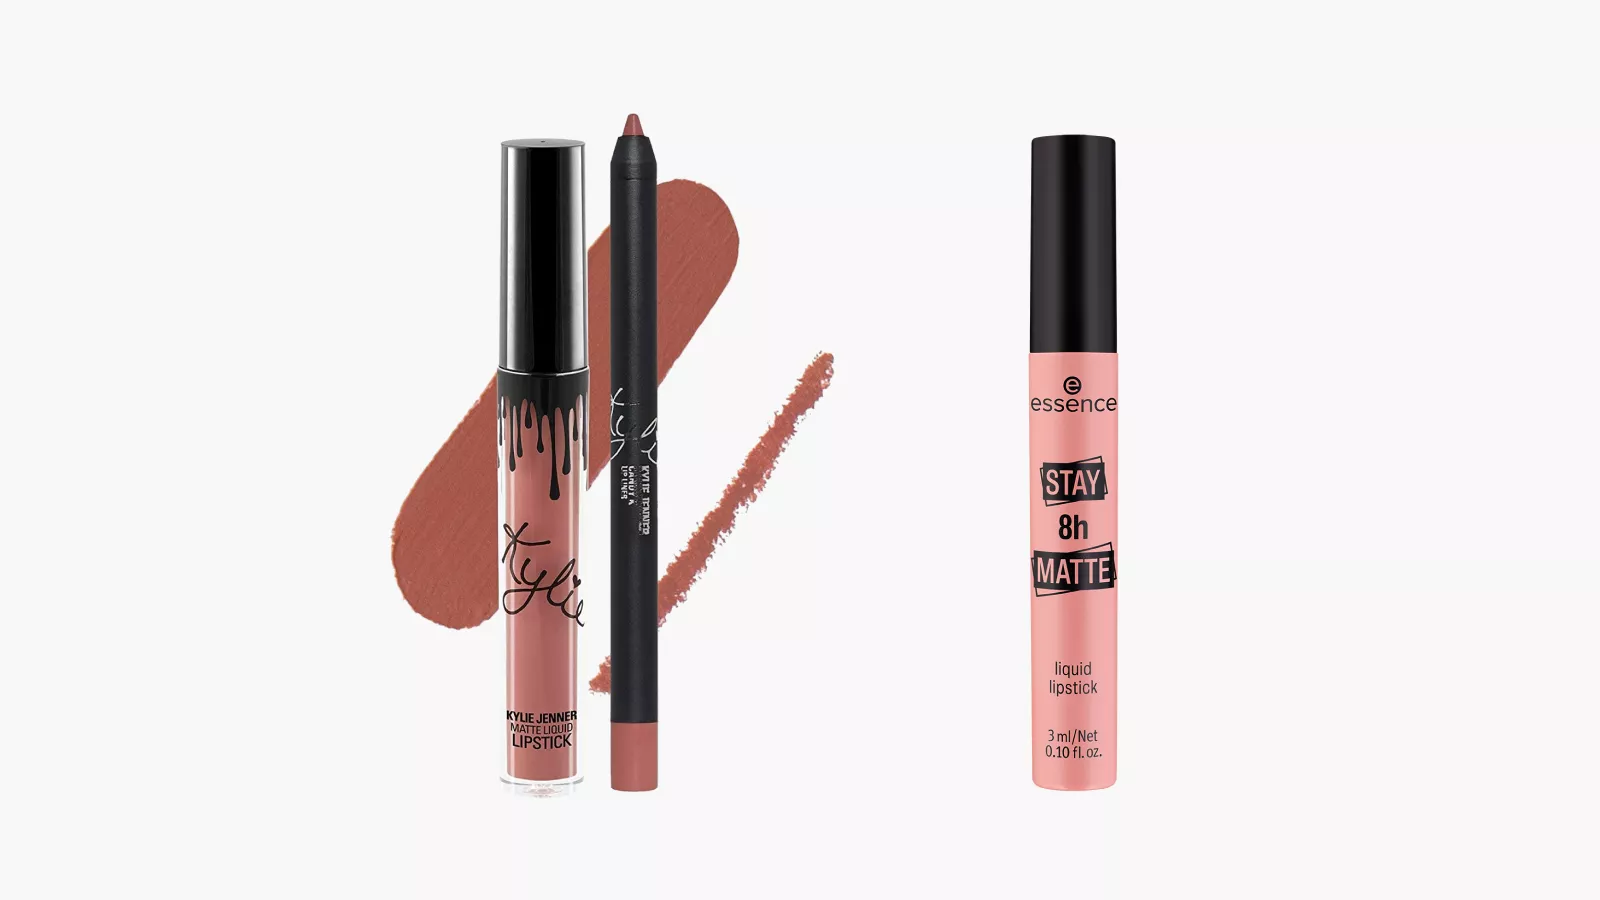 <p>Слева: набор для матового макияжа губ Candy K Matte, Kylie Cosmetics</p>

<p>Справа: матовая помада Stay 8h Matte Liquid Lipstick, Essence</p>